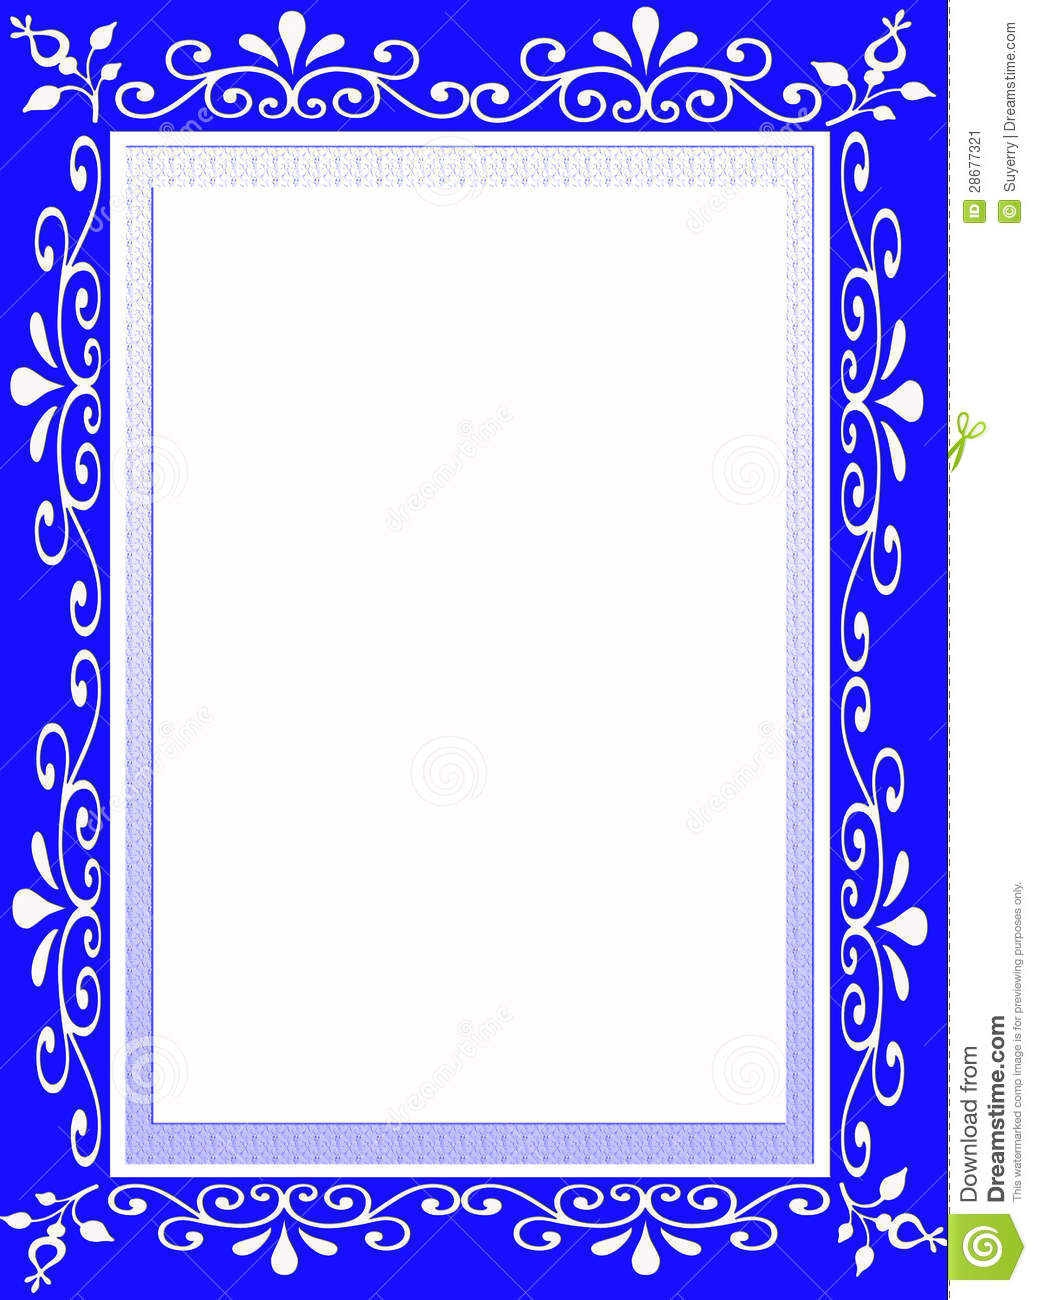 Blue Flower Borders and Frames